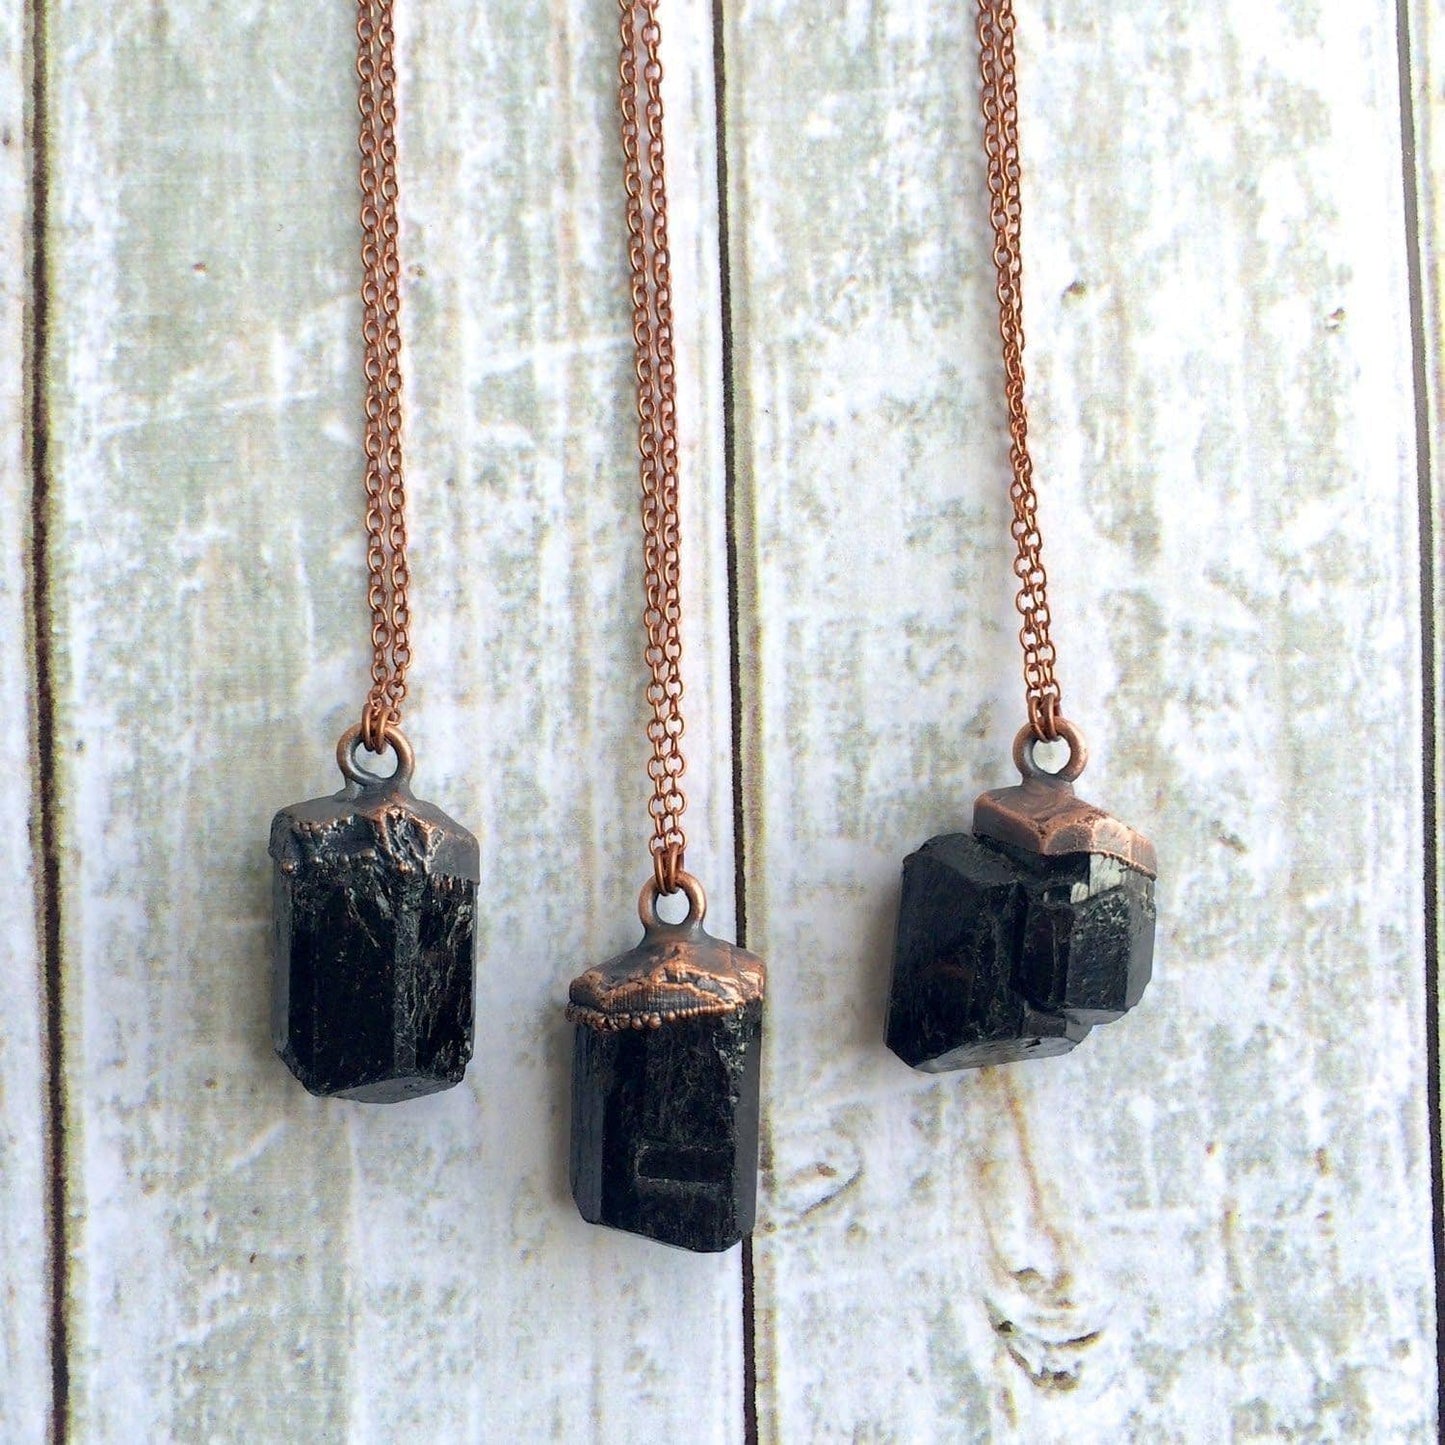 Black Tourmaline Crystal Necklace